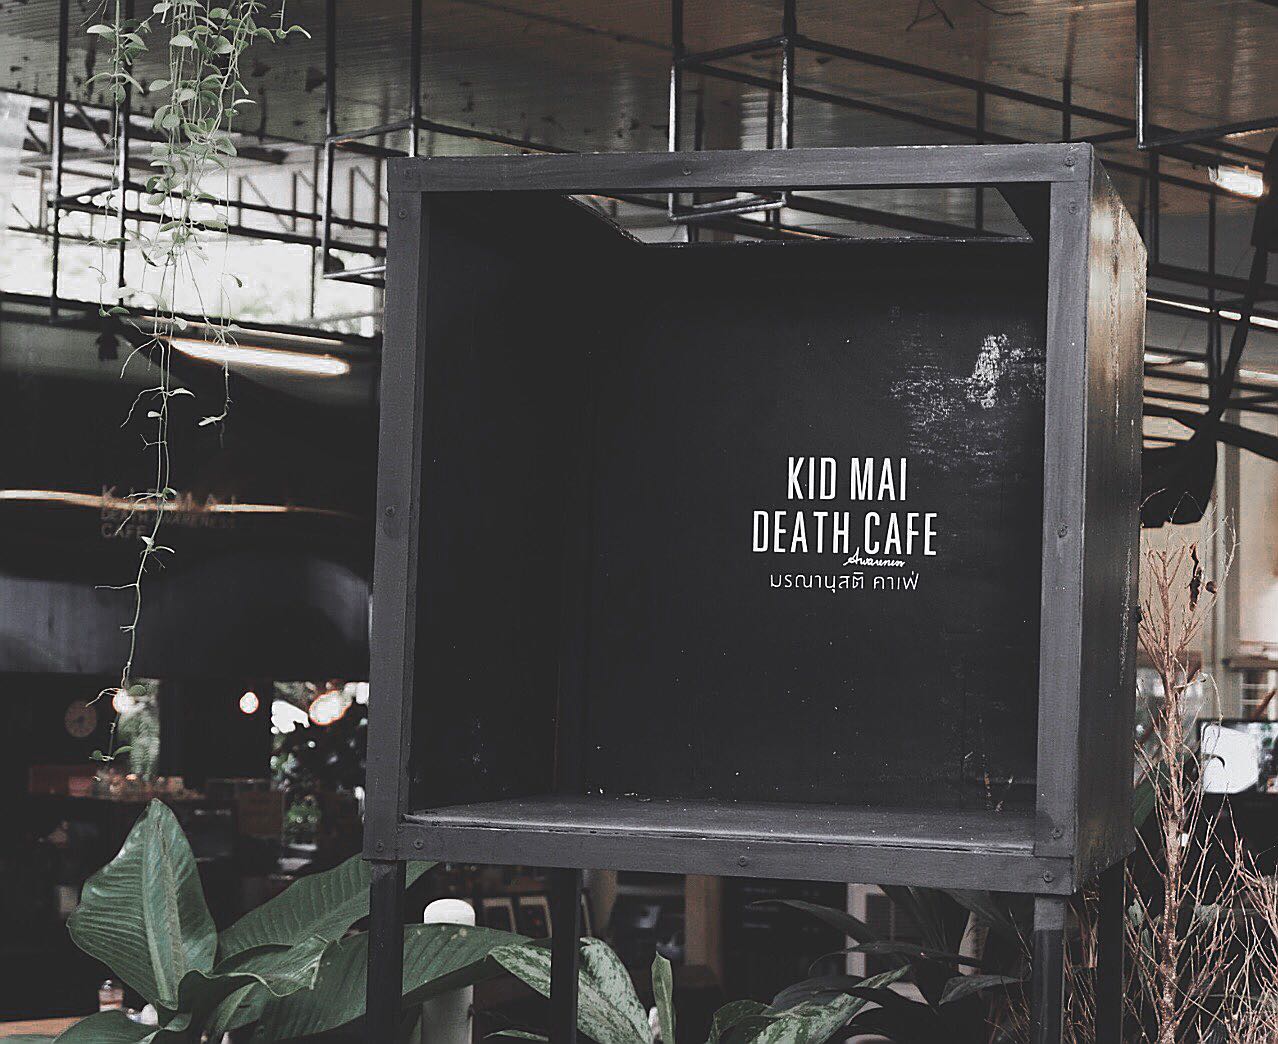 ÎÏÎ¿ÏÎ­Î»ÎµÏÎ¼Î± ÎµÎ¹ÎºÏÎ½Î±Ï Î³Î¹Î± kid mai death cafe